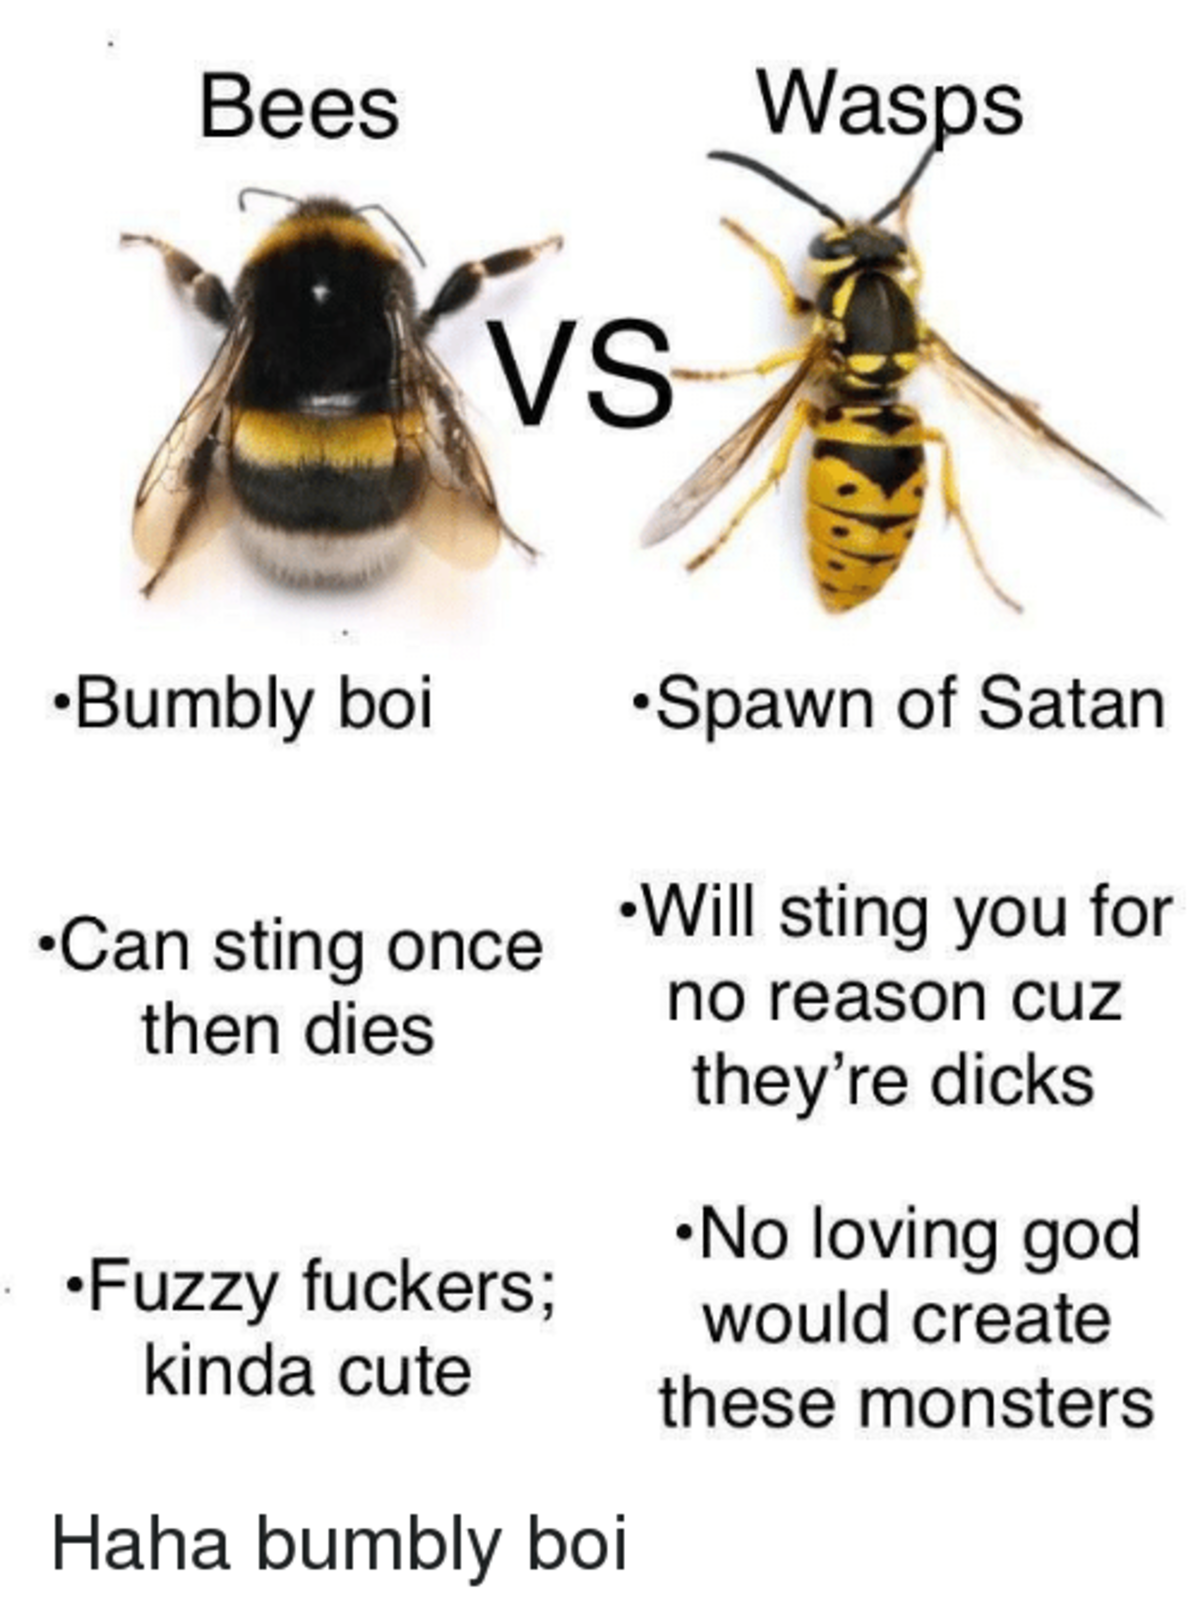 Bees and Wasps.